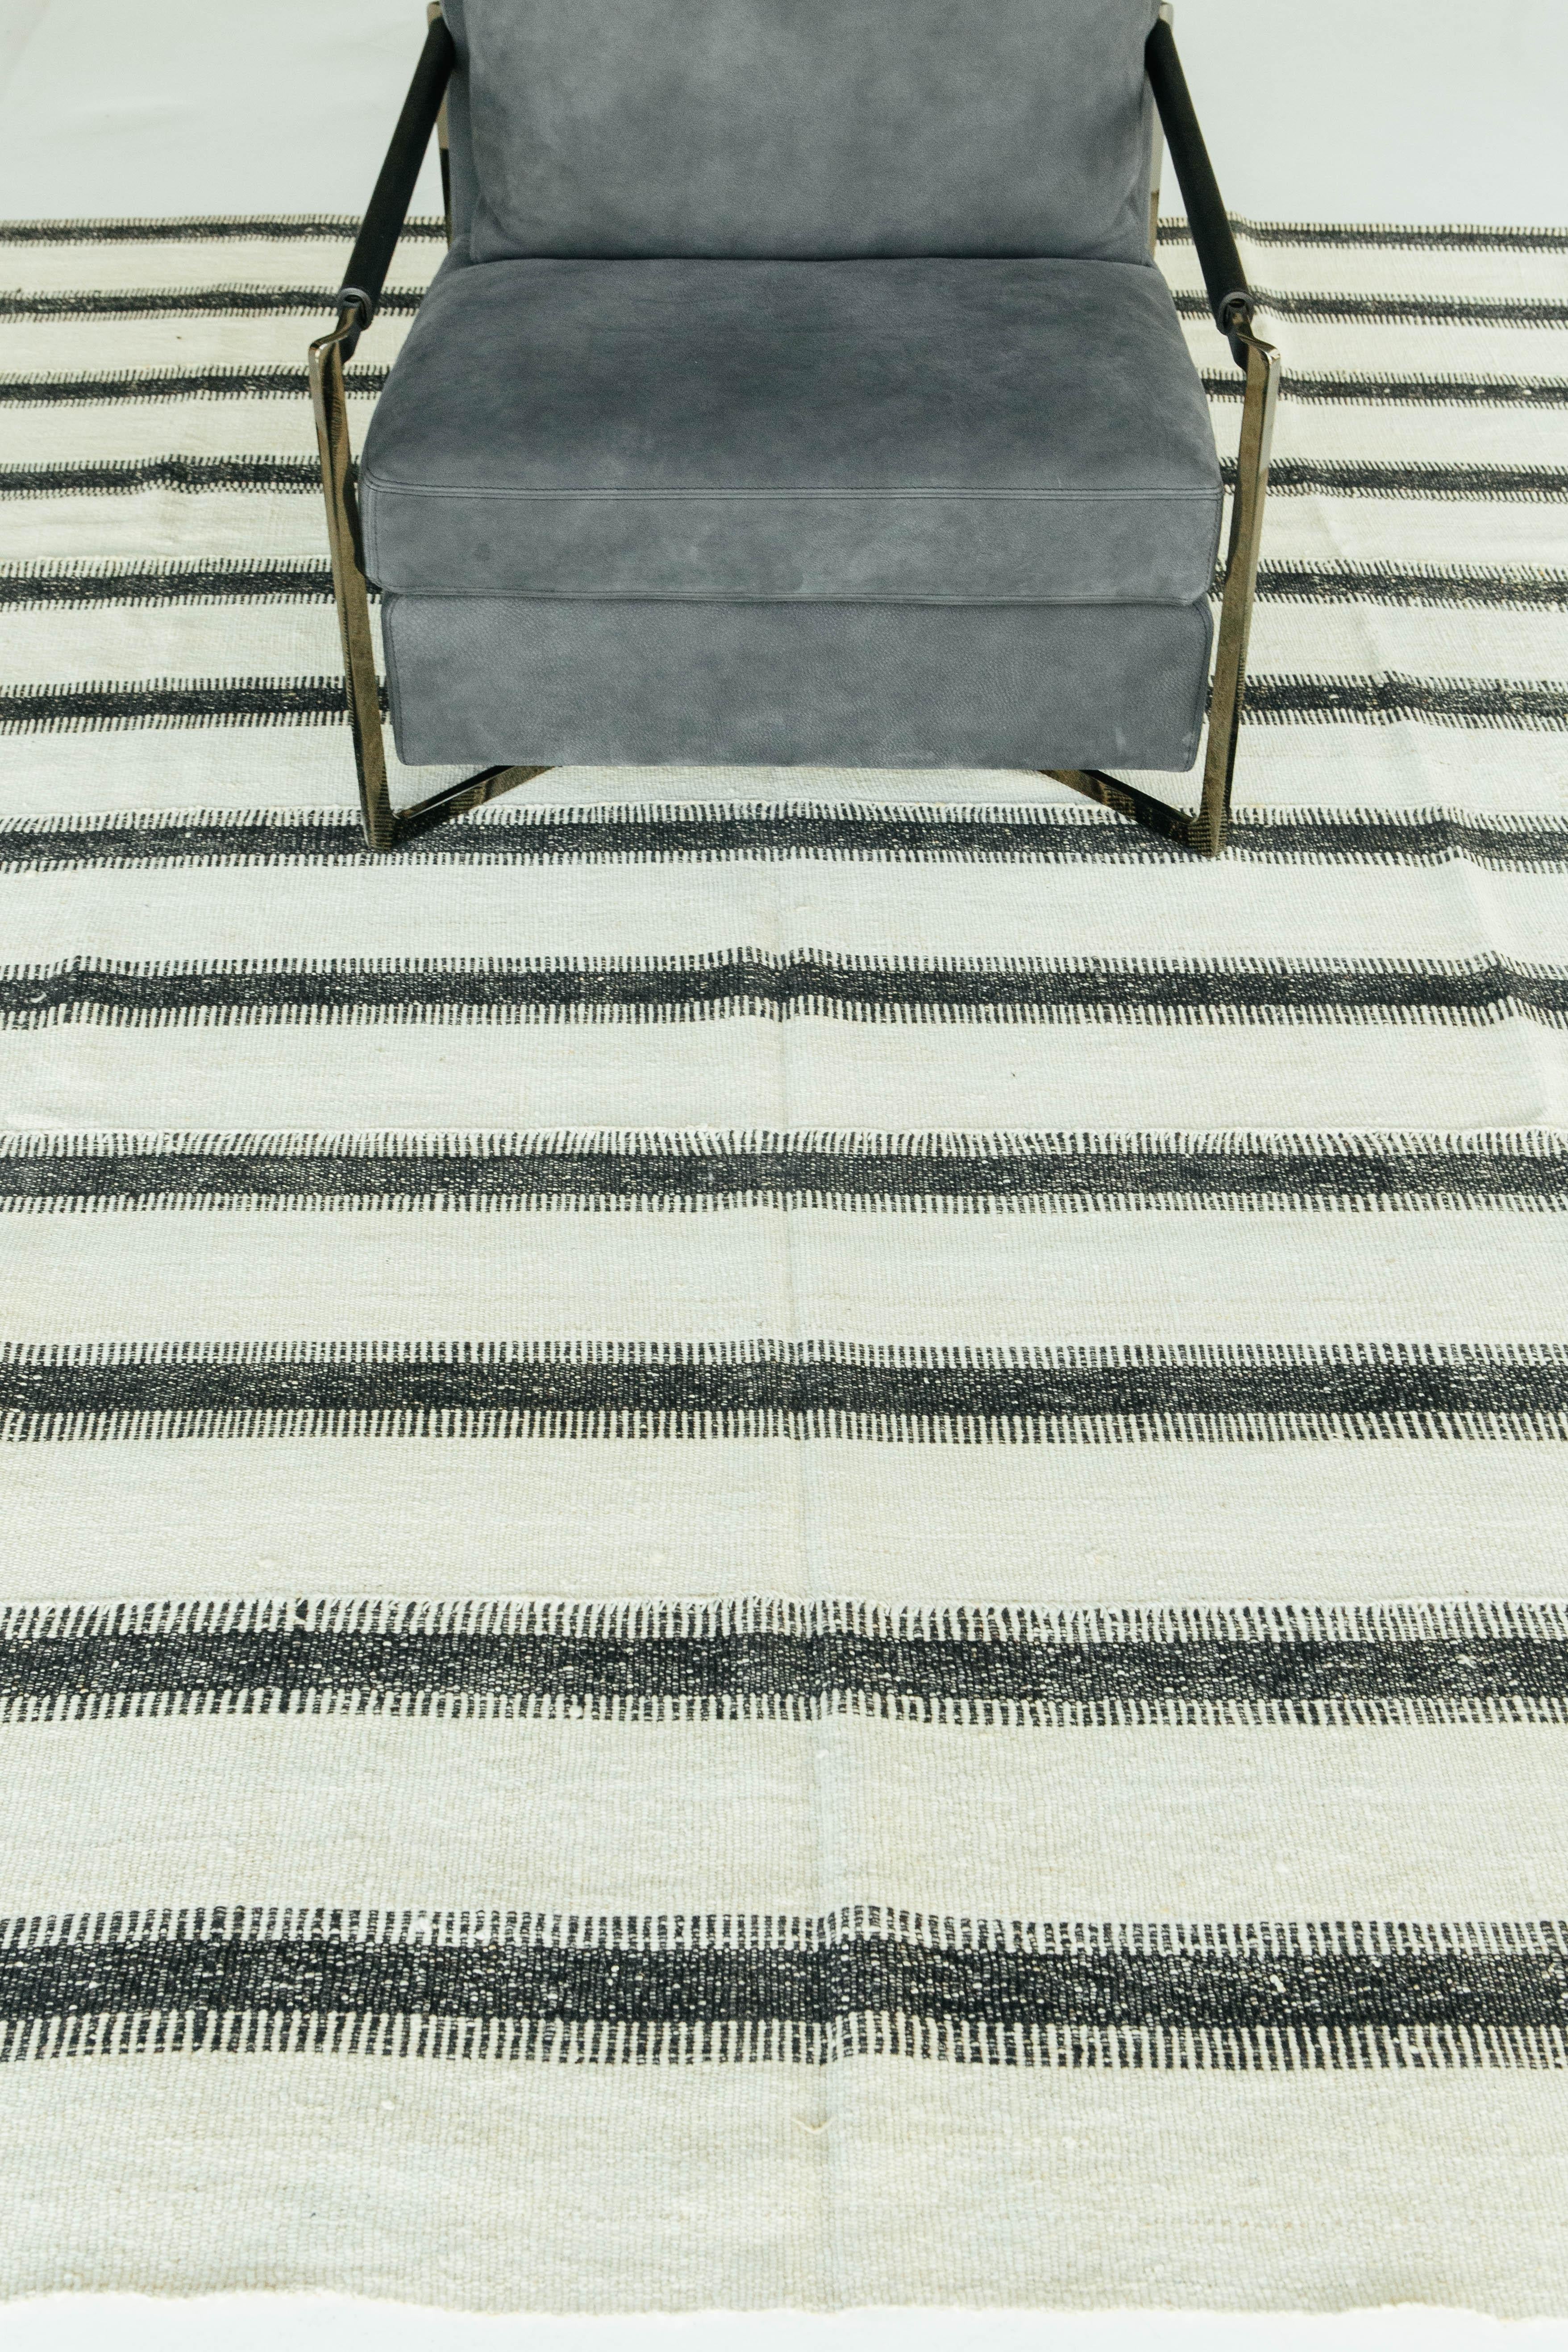 Contemporary Persian Flat Weave Jejim Kilim